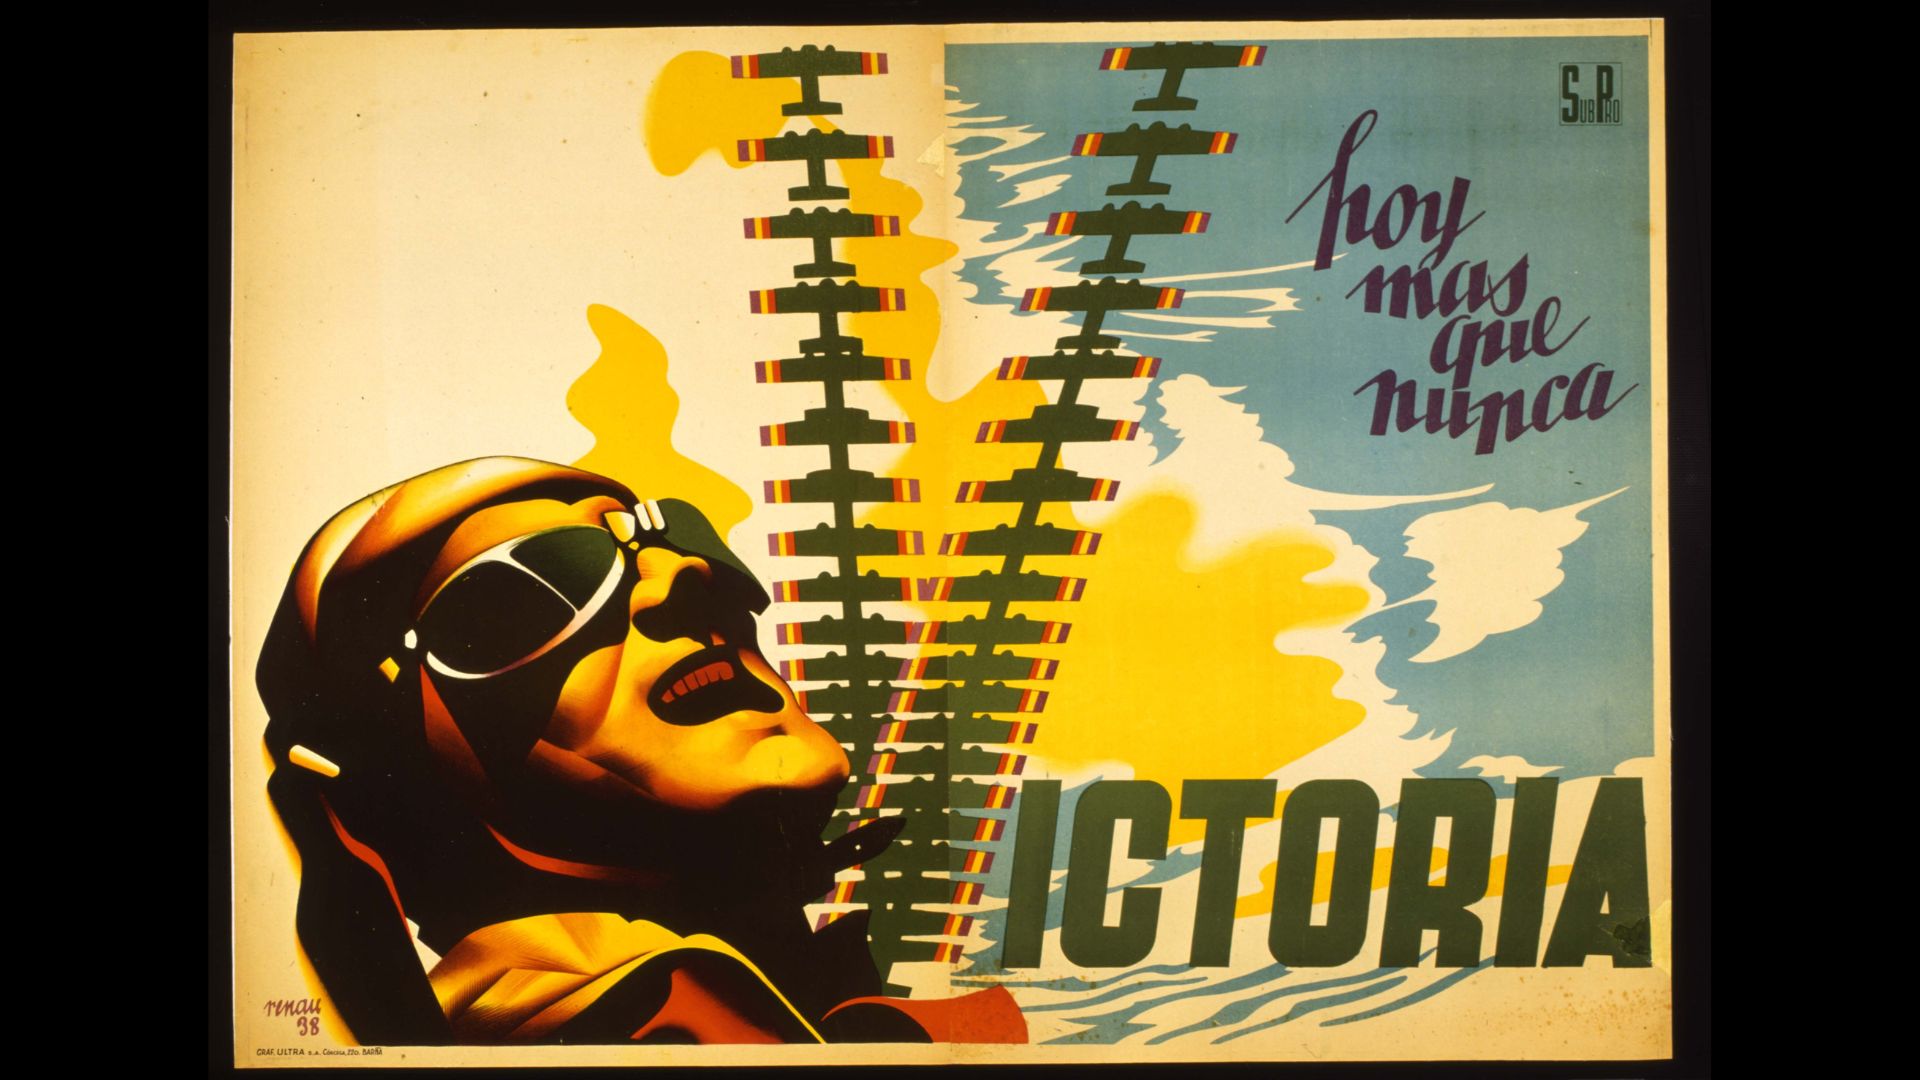 A propaganda poster from the Spanish Civil War.